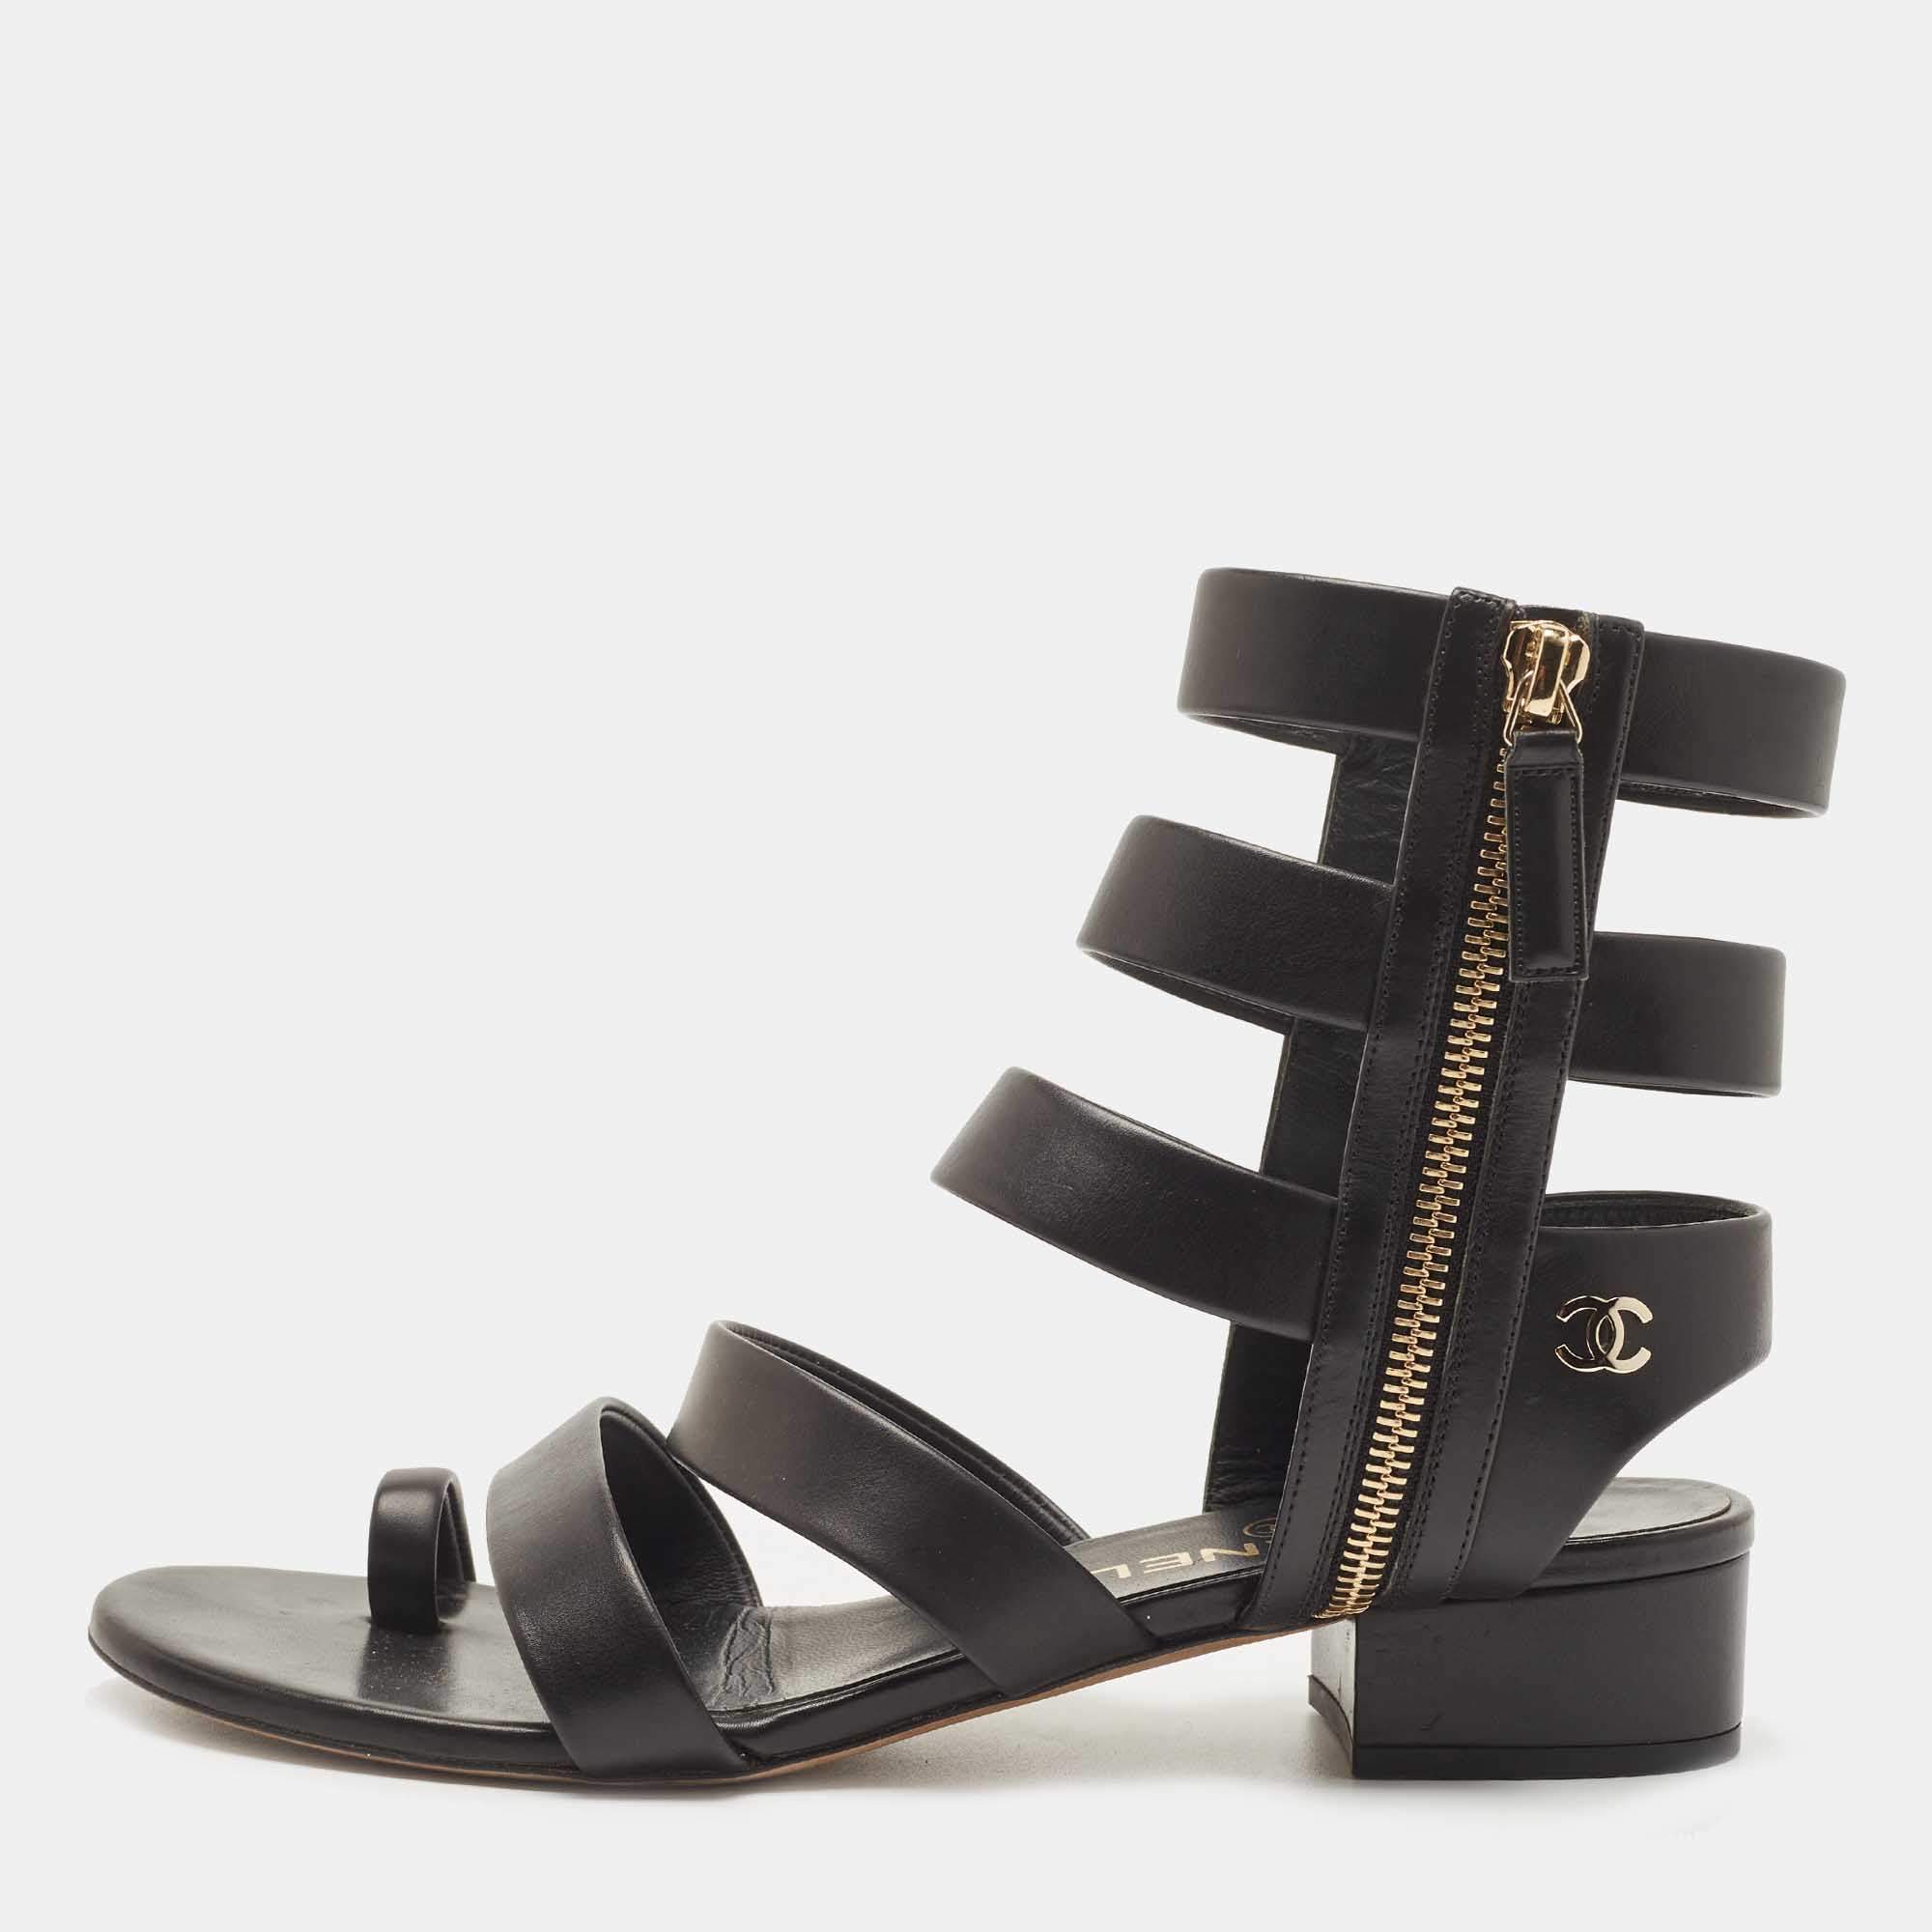 CHANEL Column Gold Leather Heels Sandals Gladiator Women's - ShopperBoard